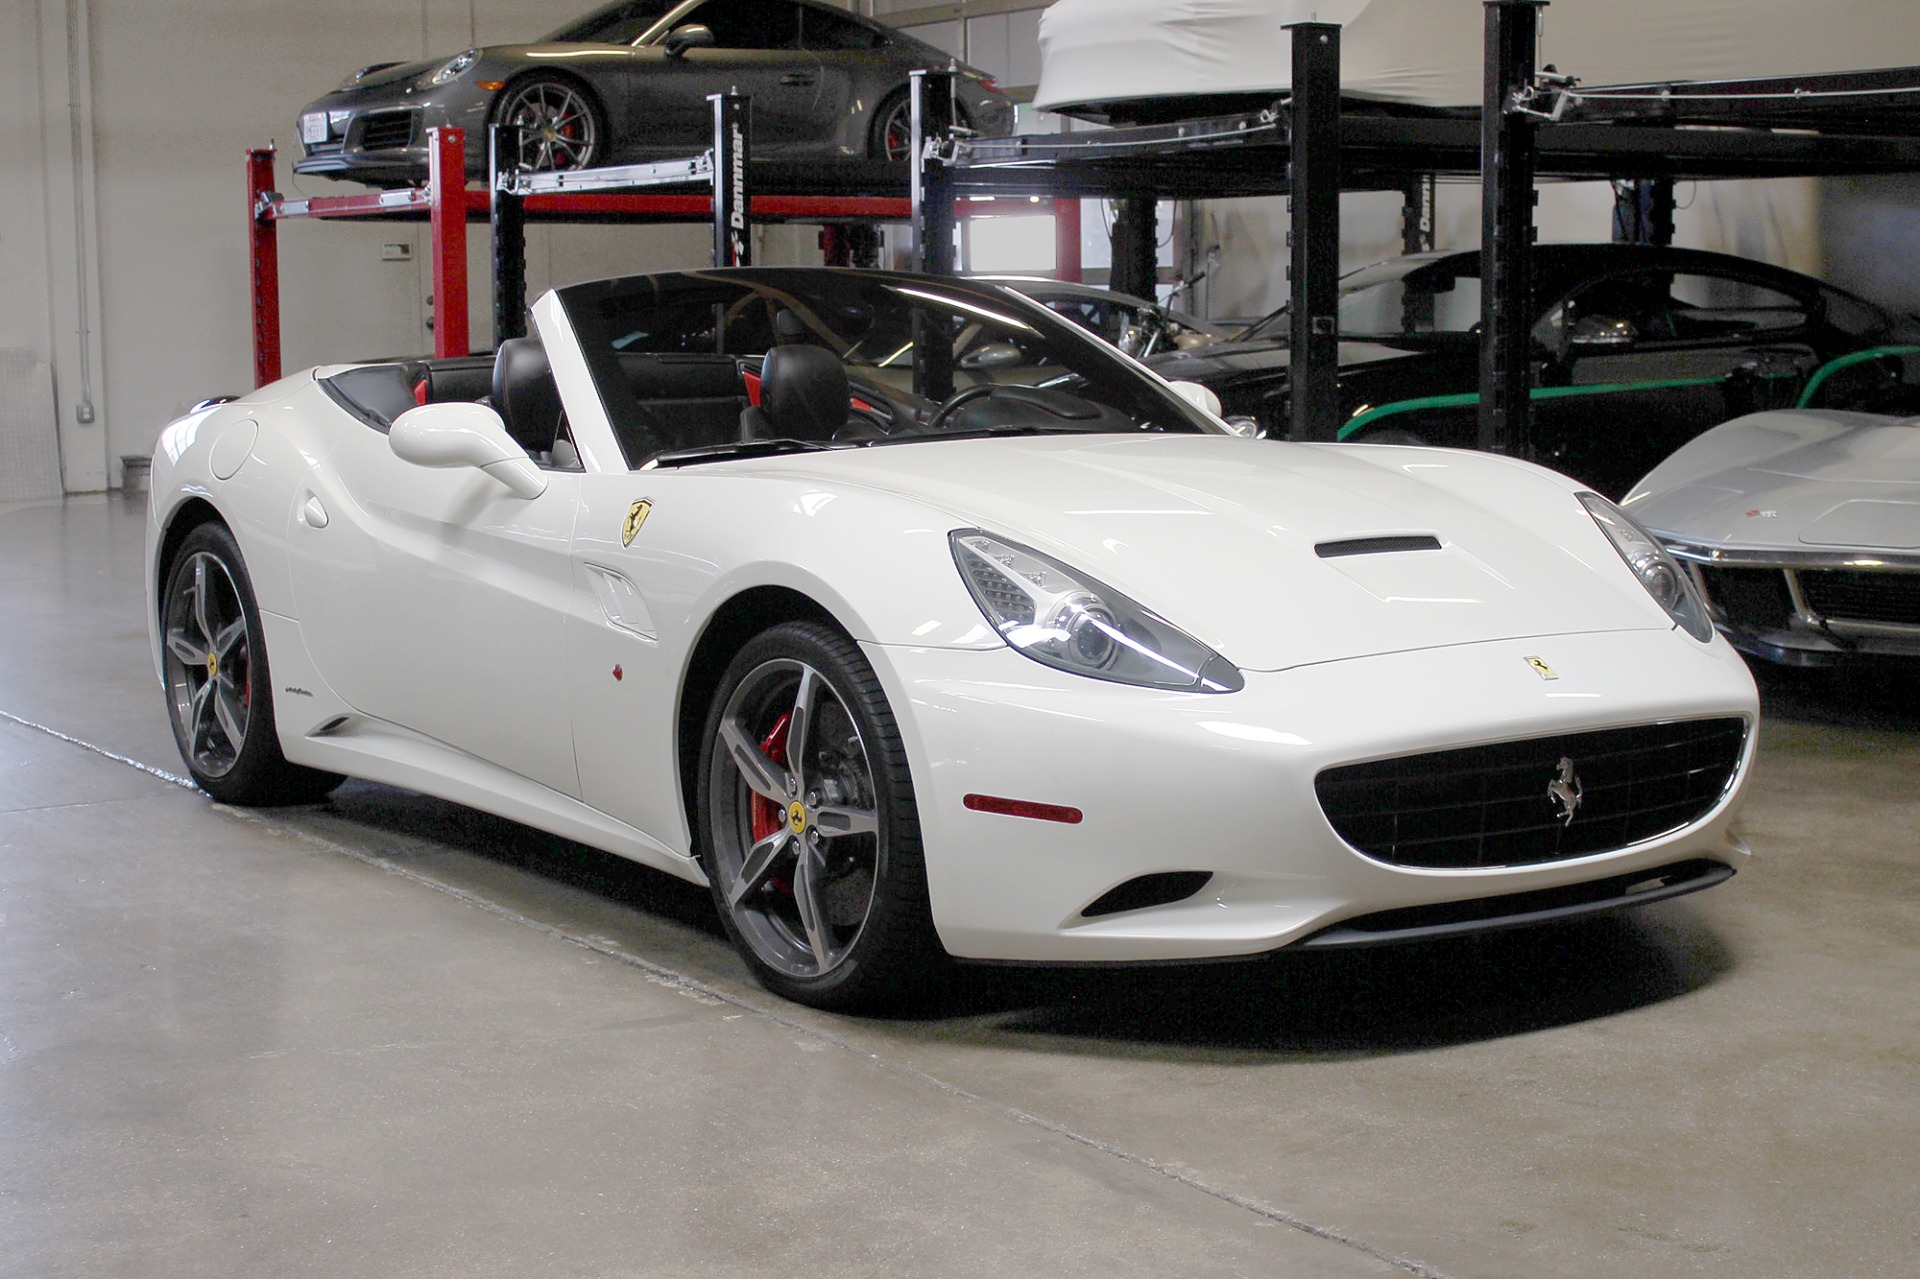 Used 2014 Ferrari California for sale Sold at San Francisco Sports Cars in San Carlos CA 94070 1